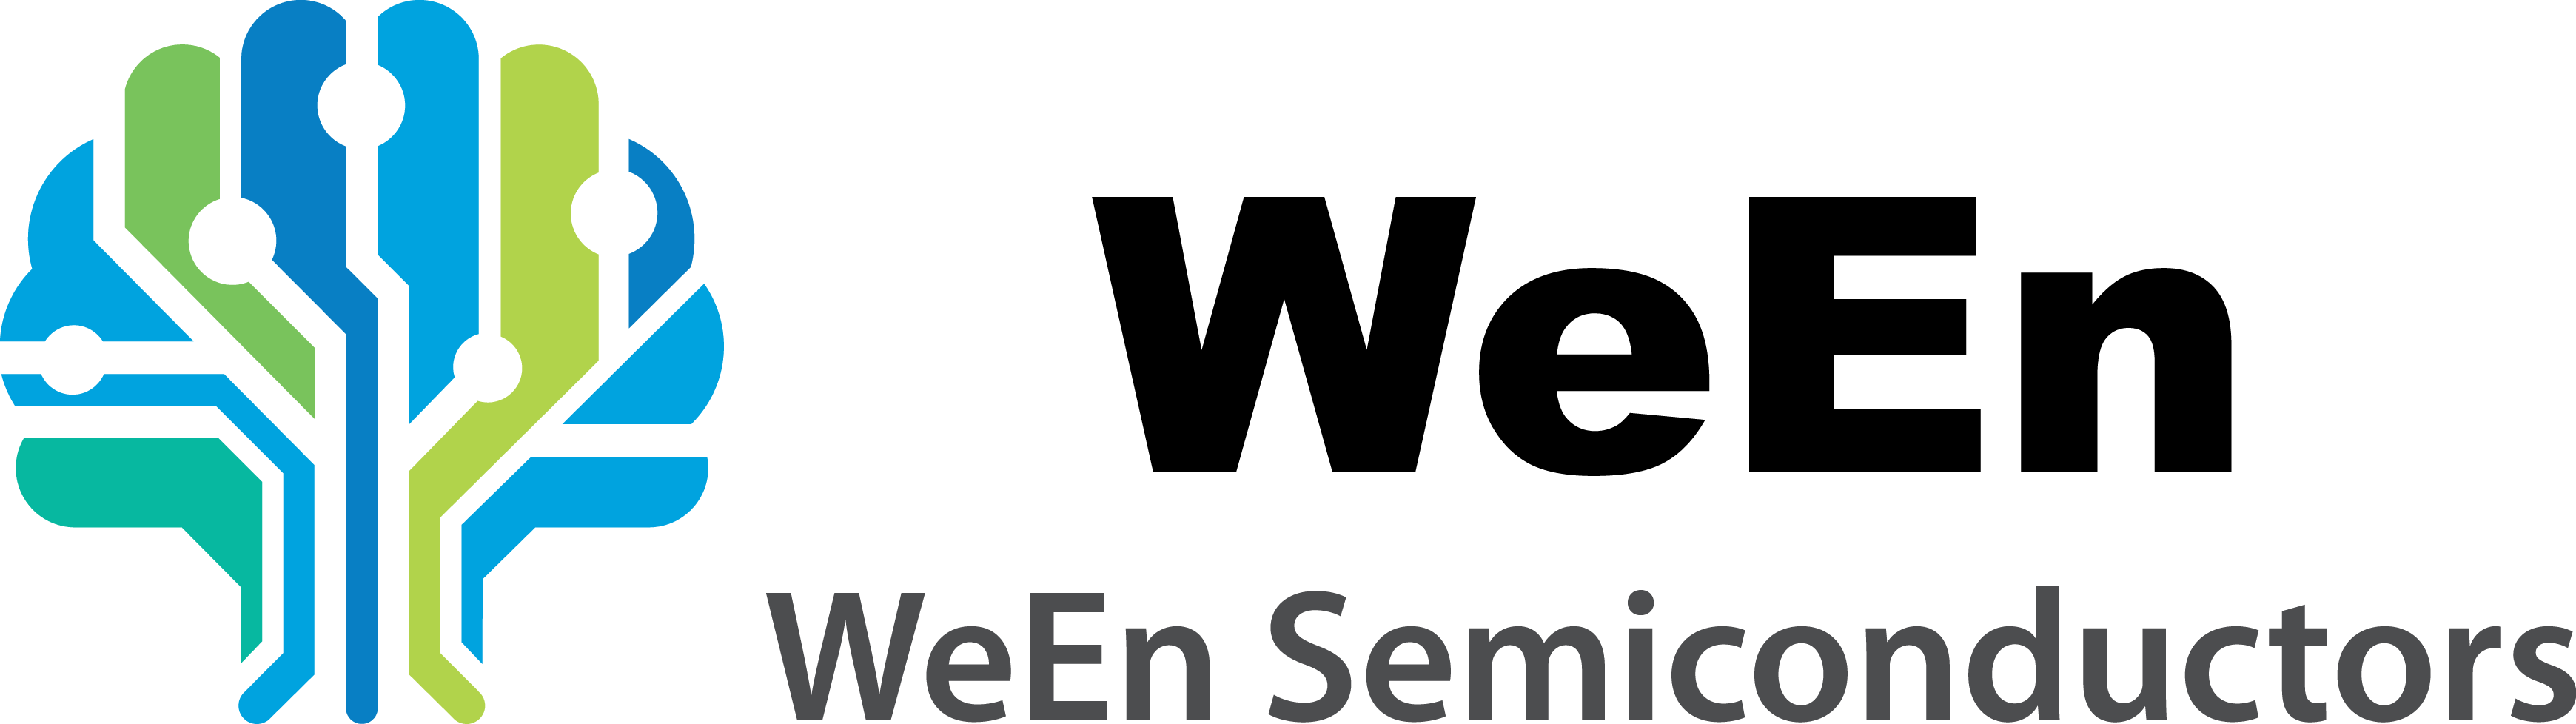 Ween Logo - WeEn-logo | DOWO Digital